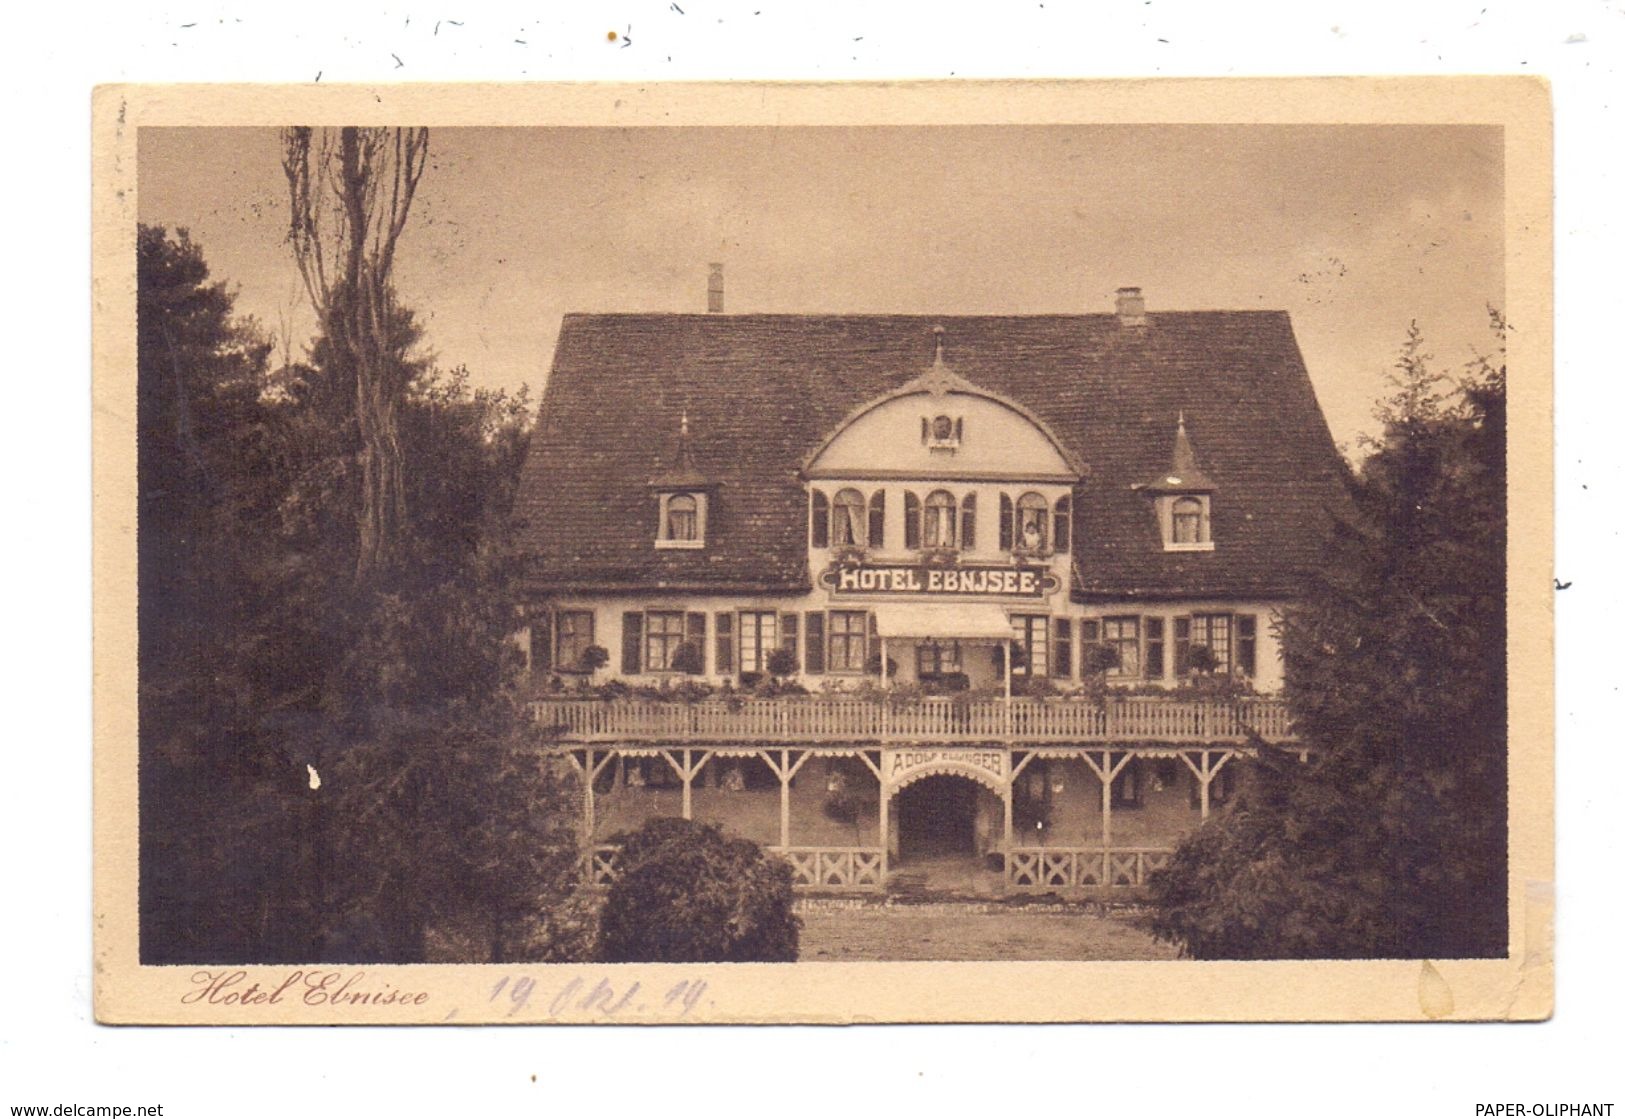 7063 WELZHEIM - GAUSMANNSWEILER, Hotel Ebnisee, 1914 - Waiblingen